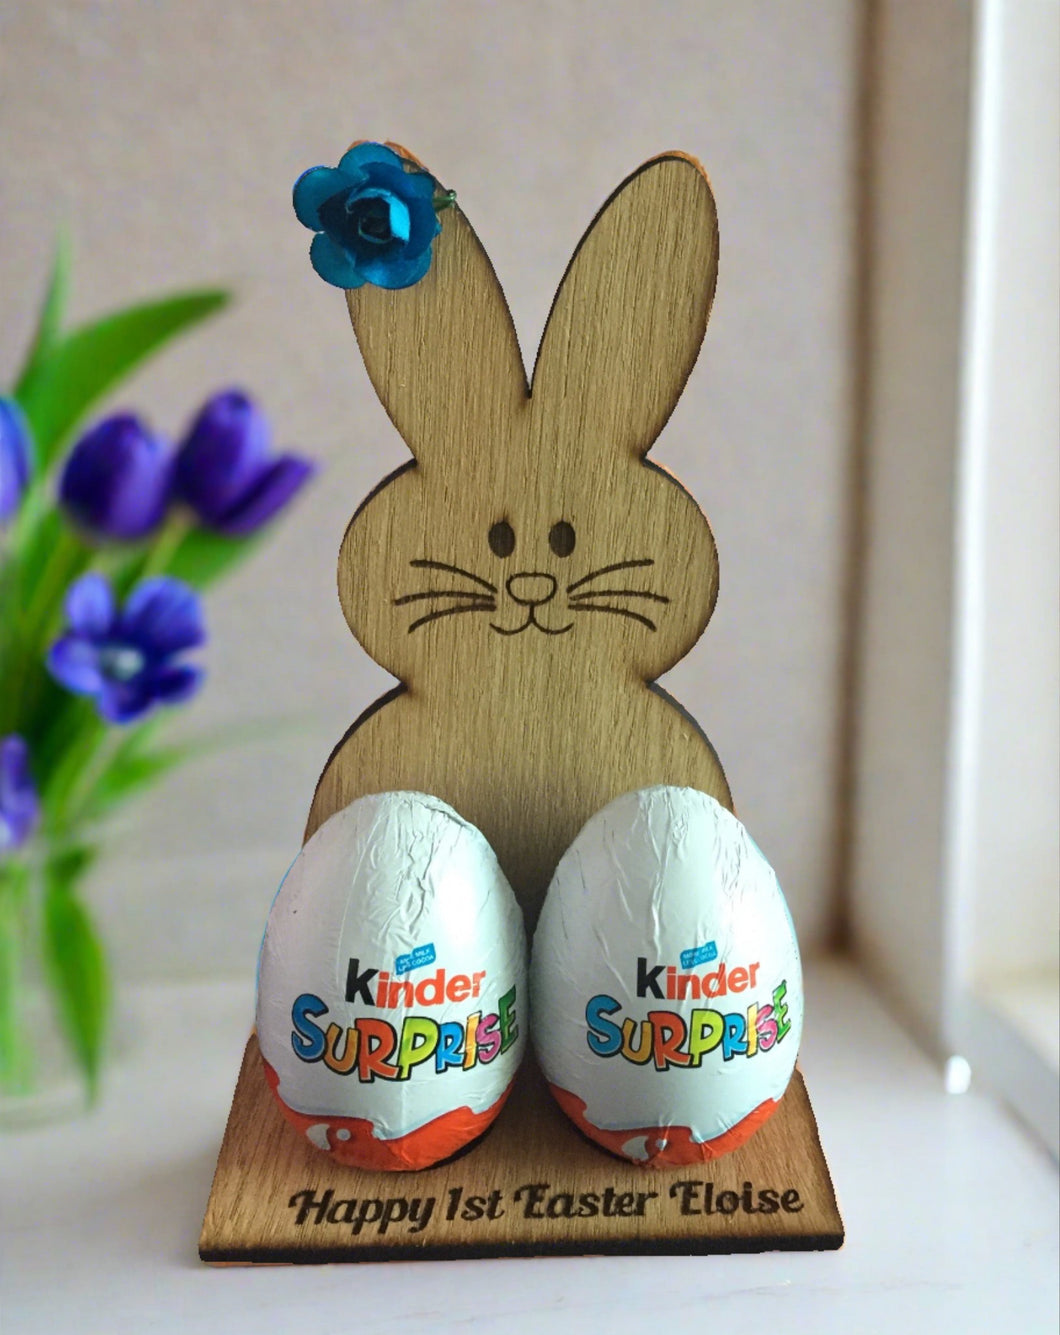 Oak veneer personalised bunny for chocolates eggs - Laser LLama Designs Ltd